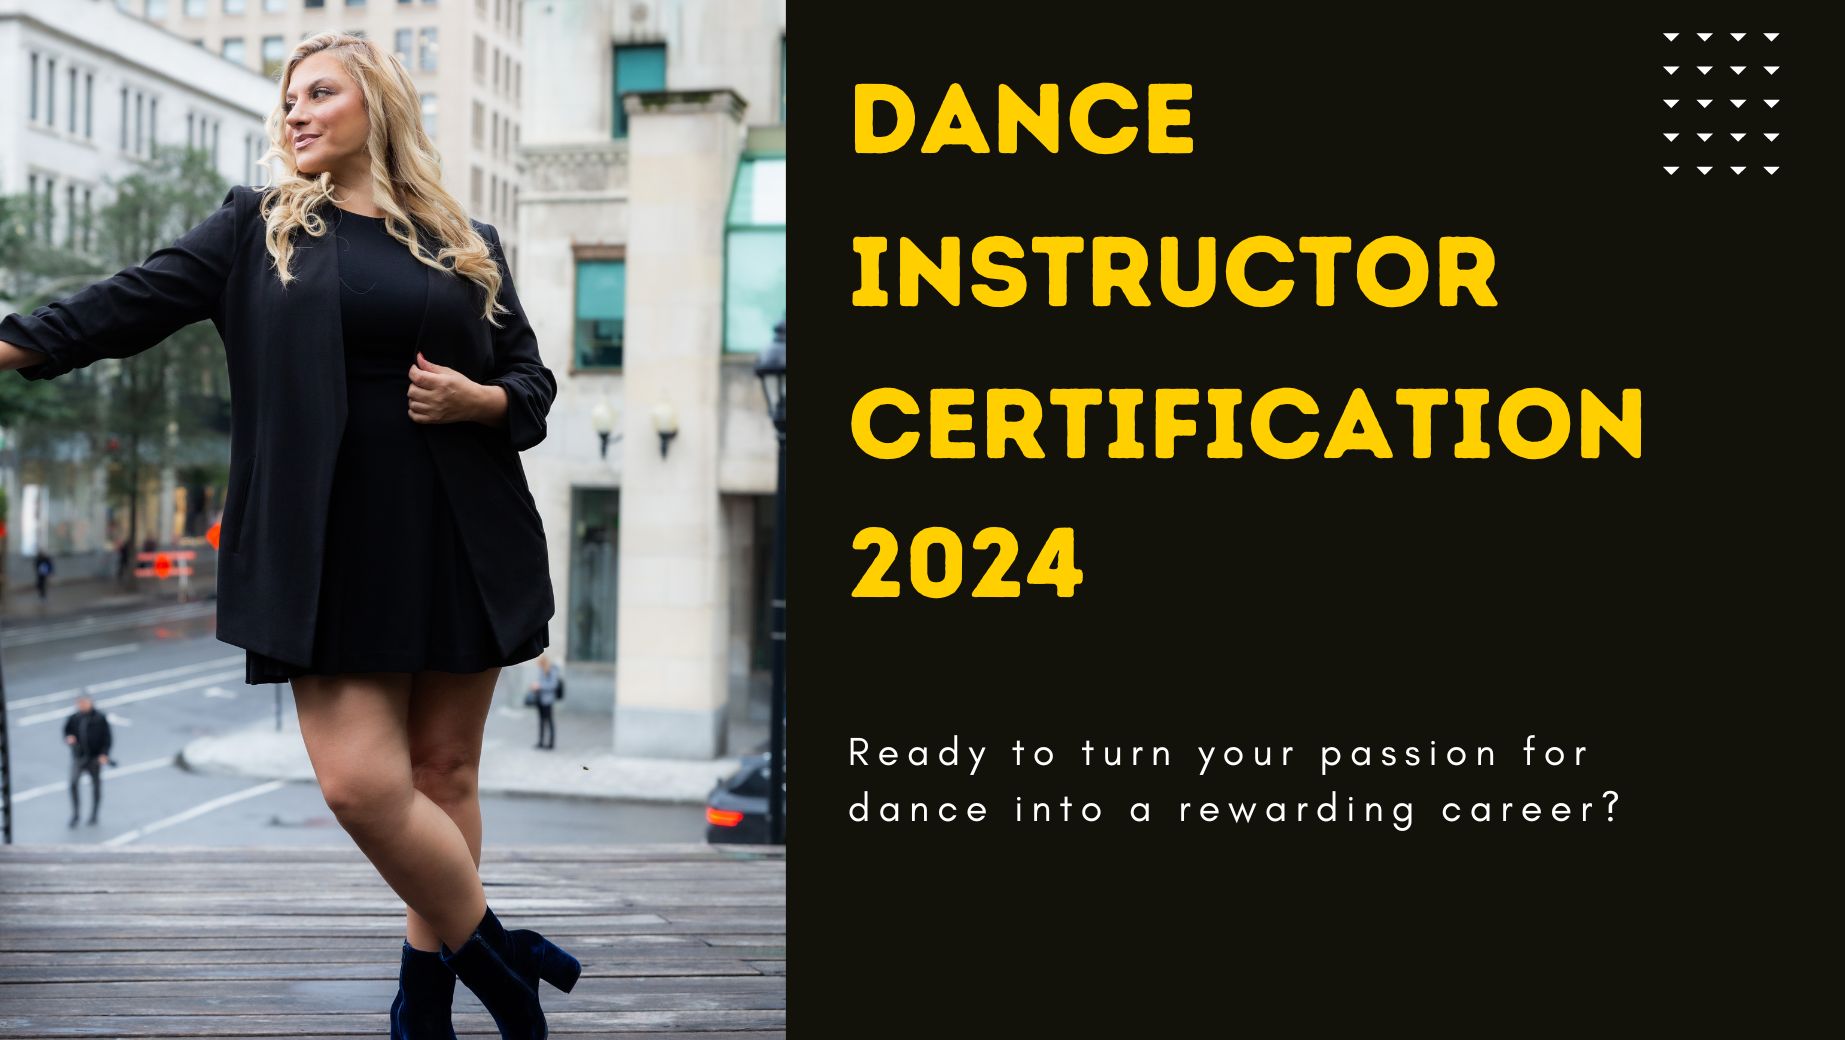 Dance instructor certification